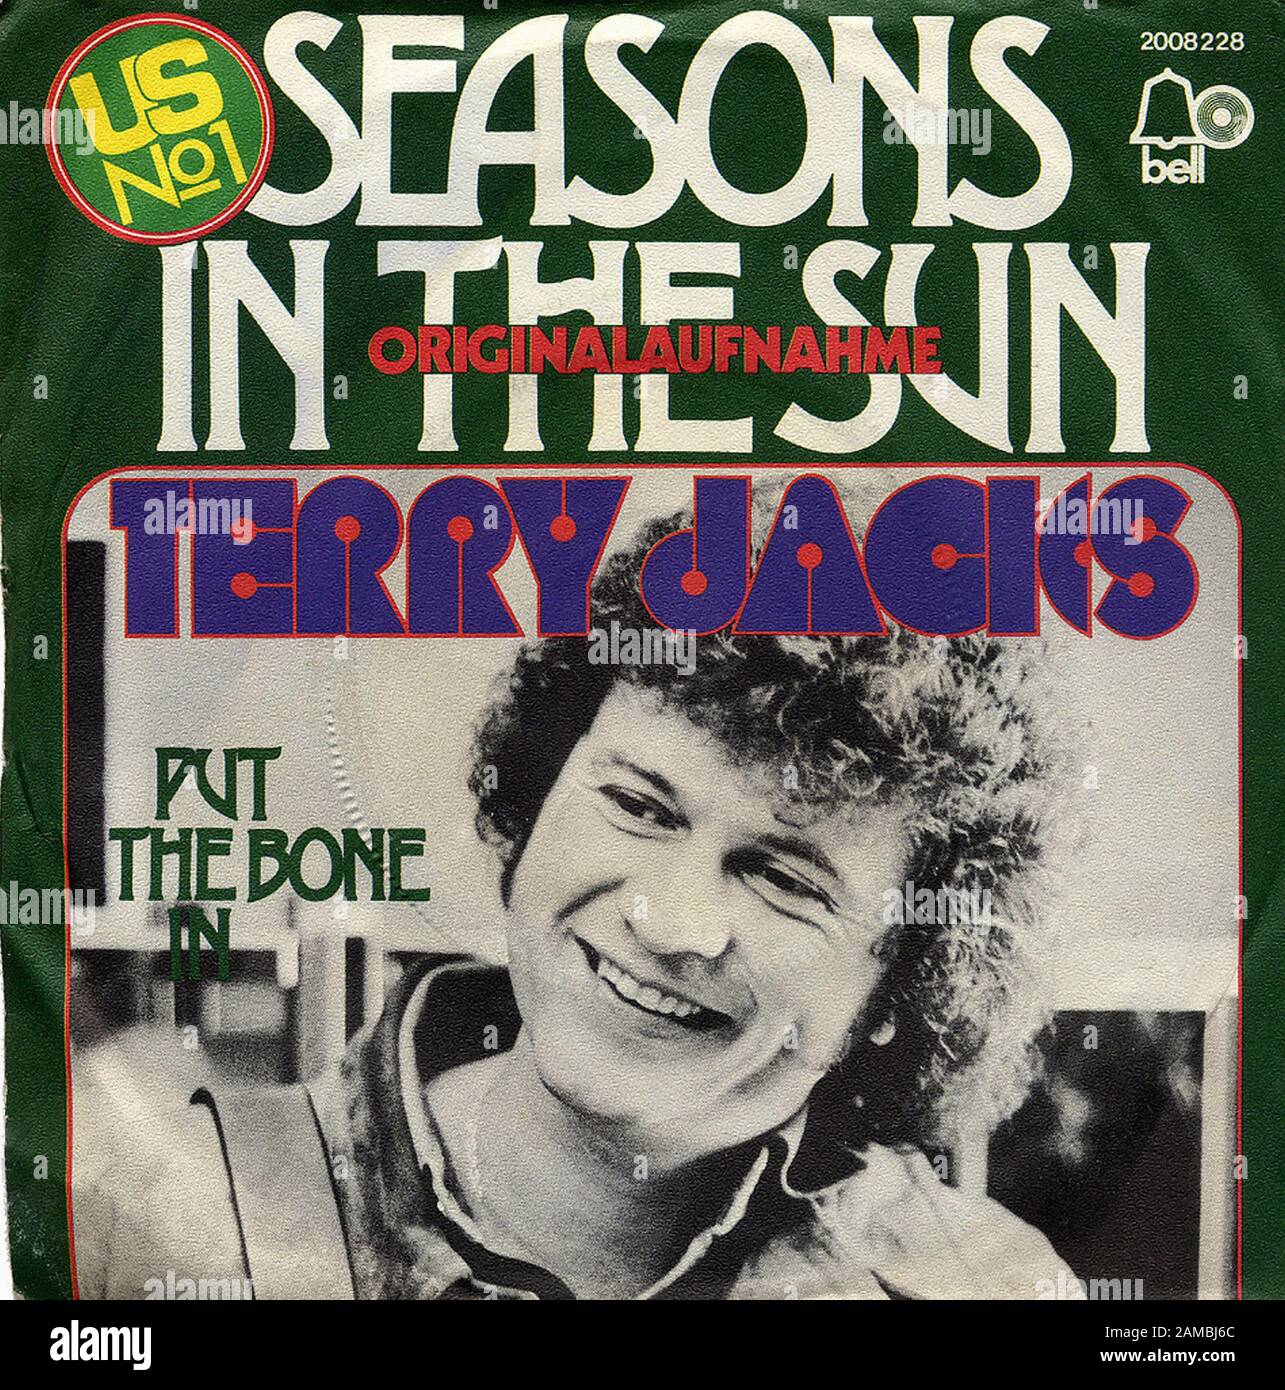 Terry Jacks - Seasons In The Sun - klassisches Vinyl-Album im Vinyl  Stockfotografie - Alamy